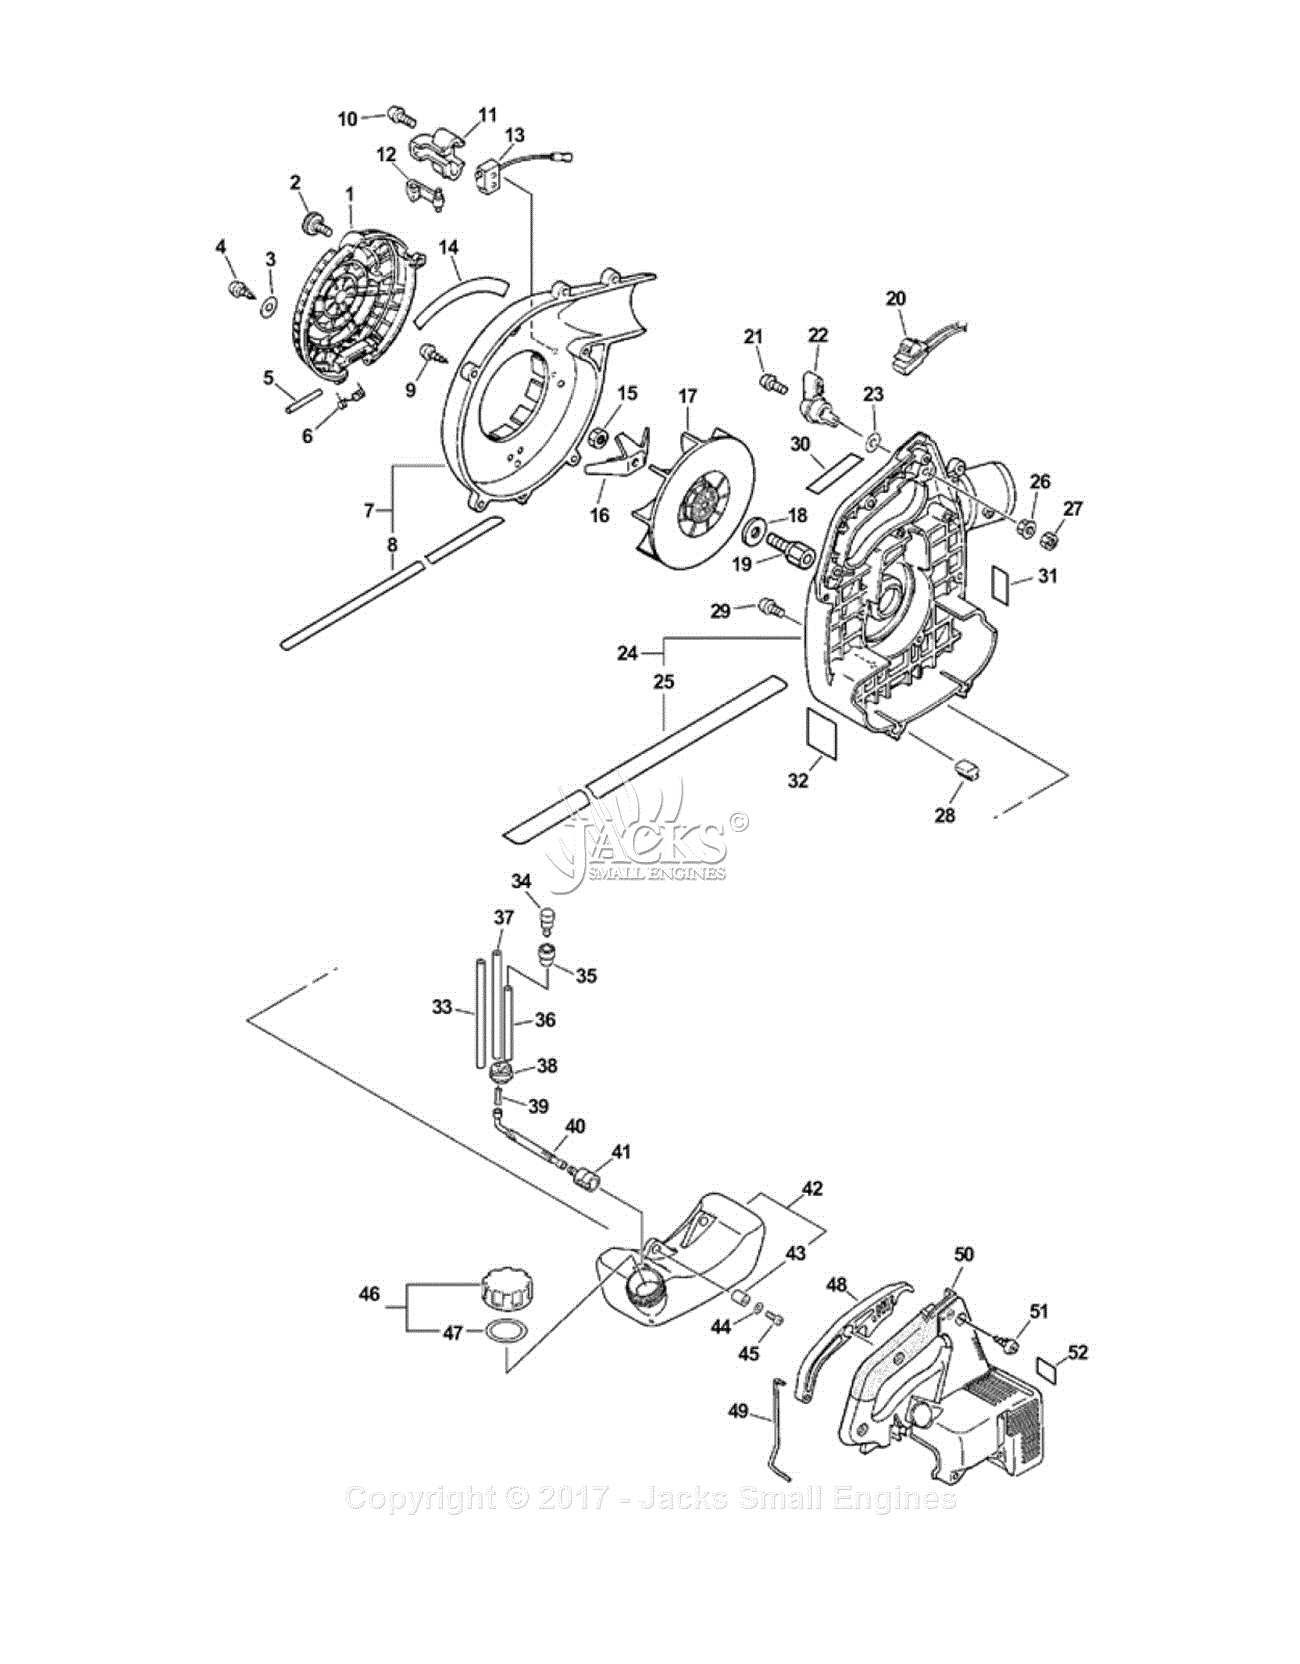 Echo ES-2400 Type 1E Parts Diagram for Fan Case, Engine Cover, Fuel System